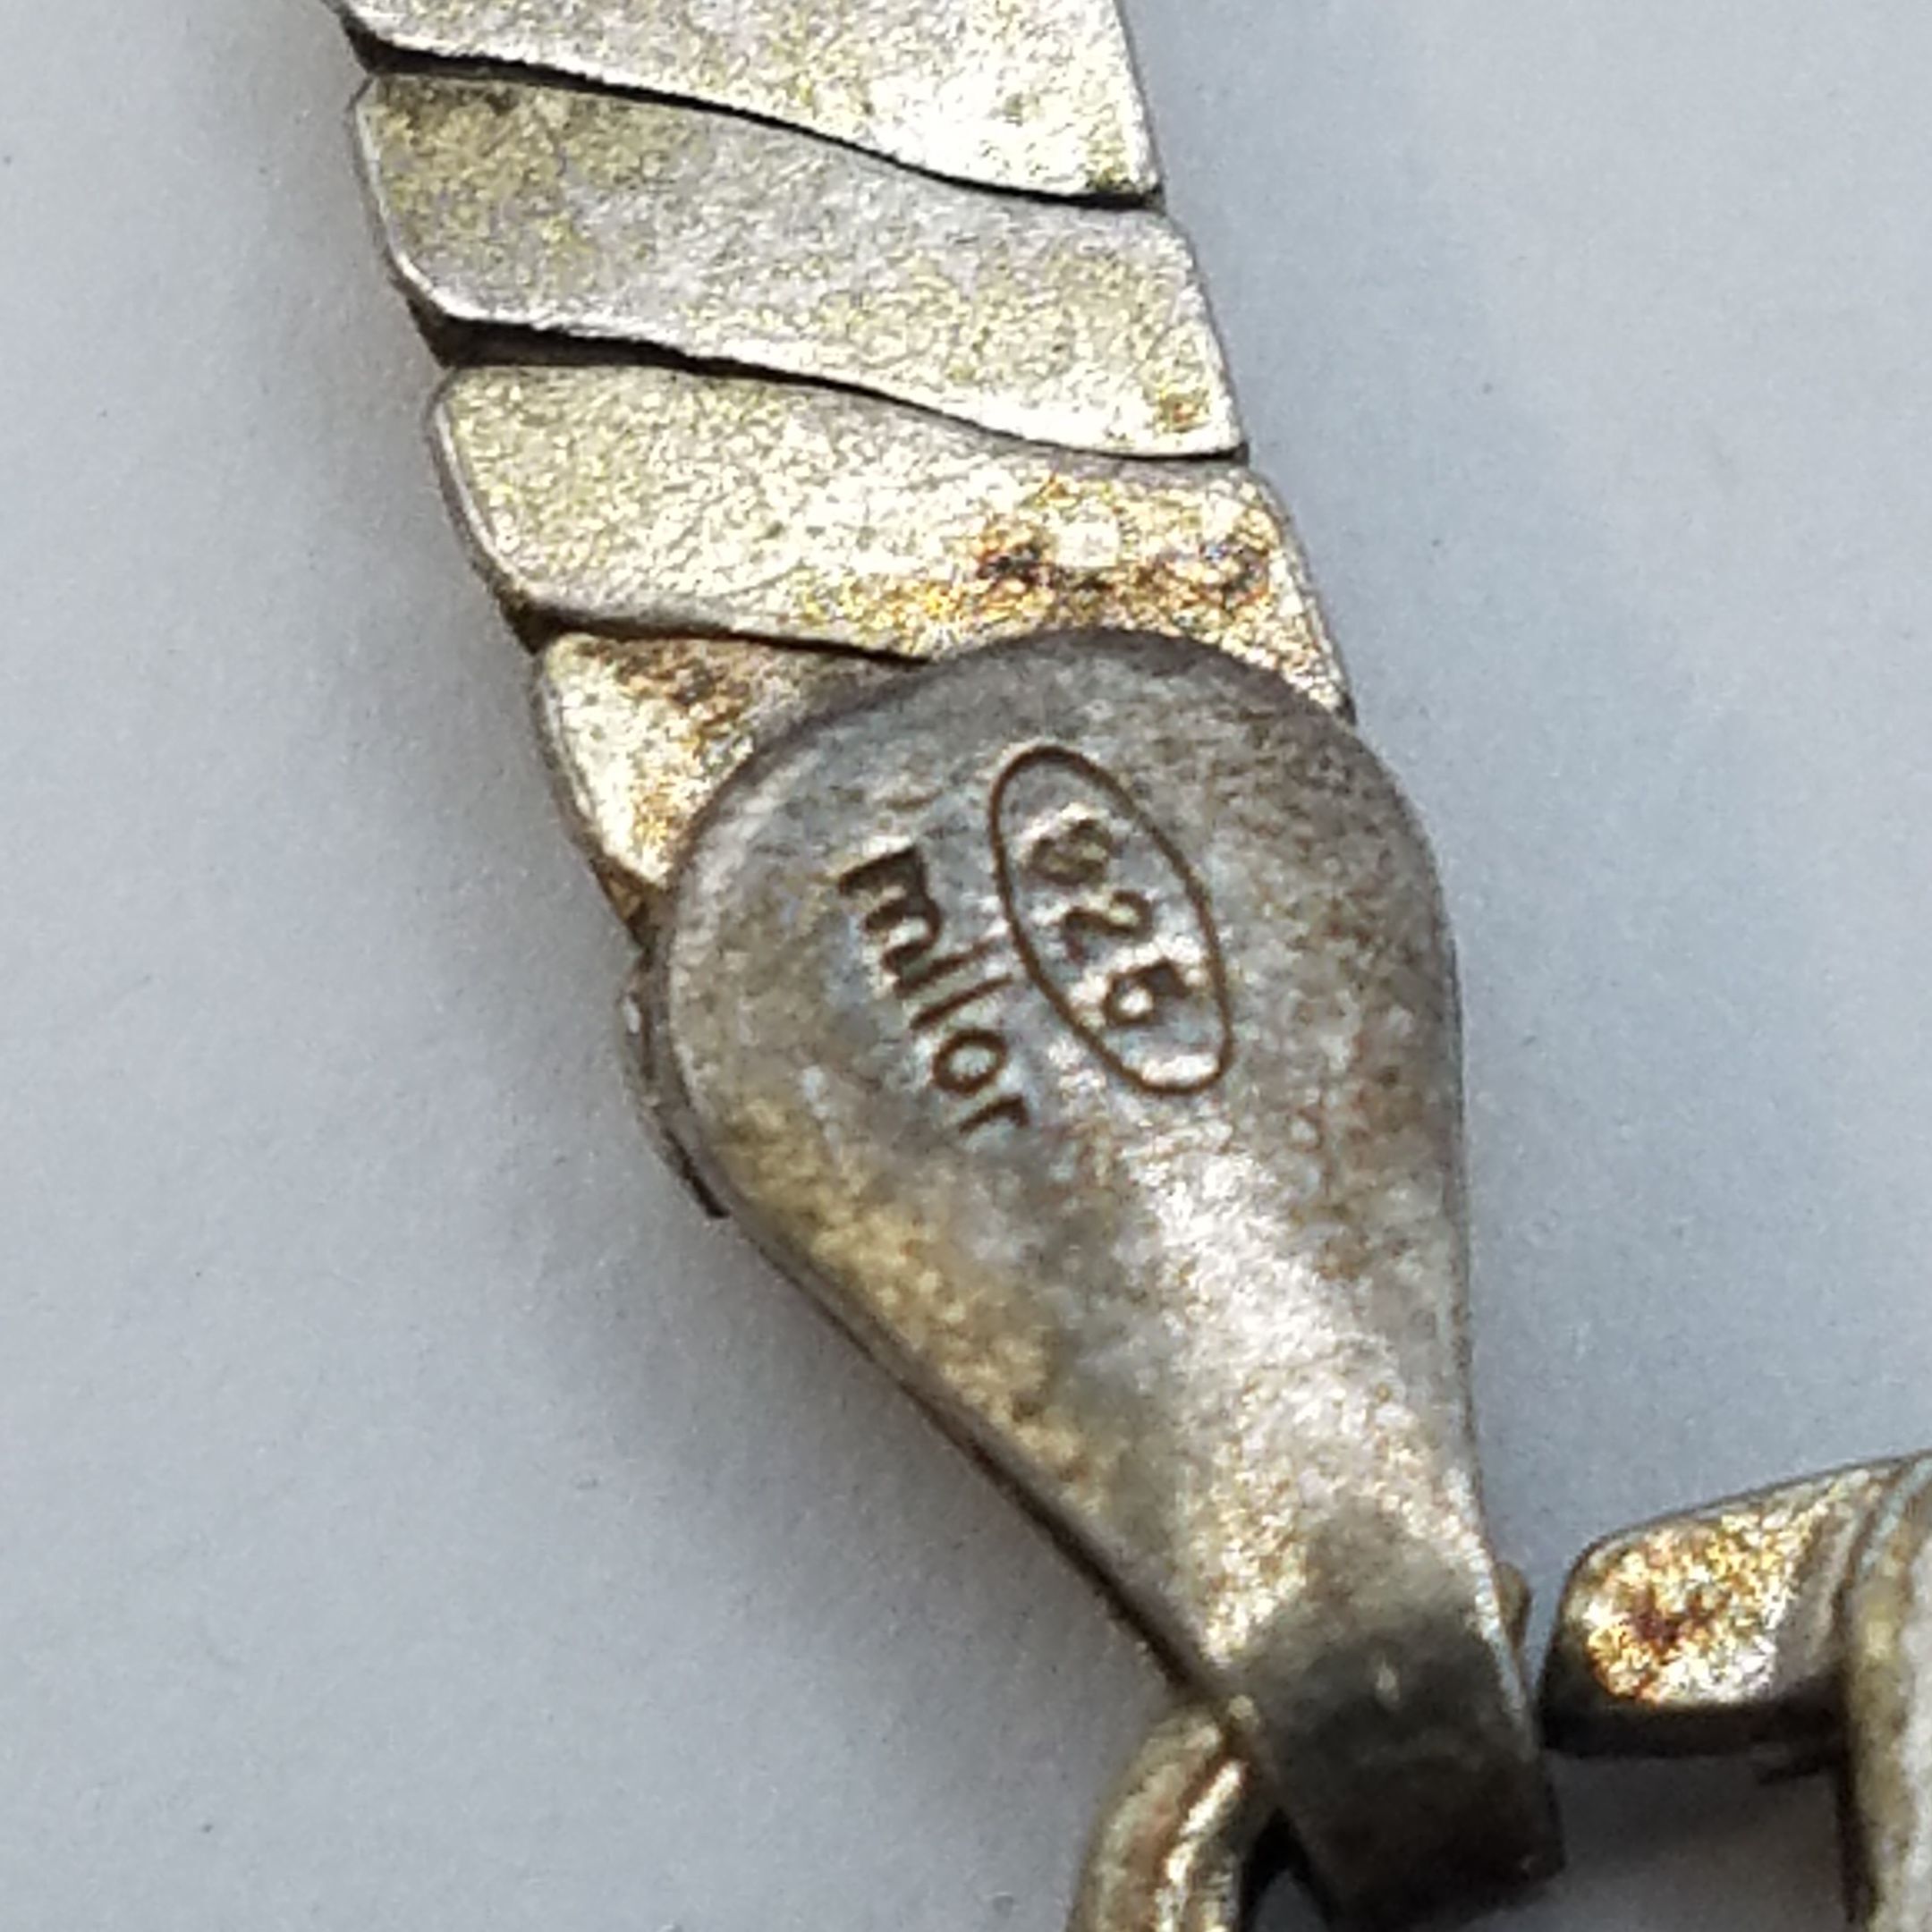 Ornate Navajo Sterling Silver Hand Made Cuff Bracelet 20 Grams | eBay